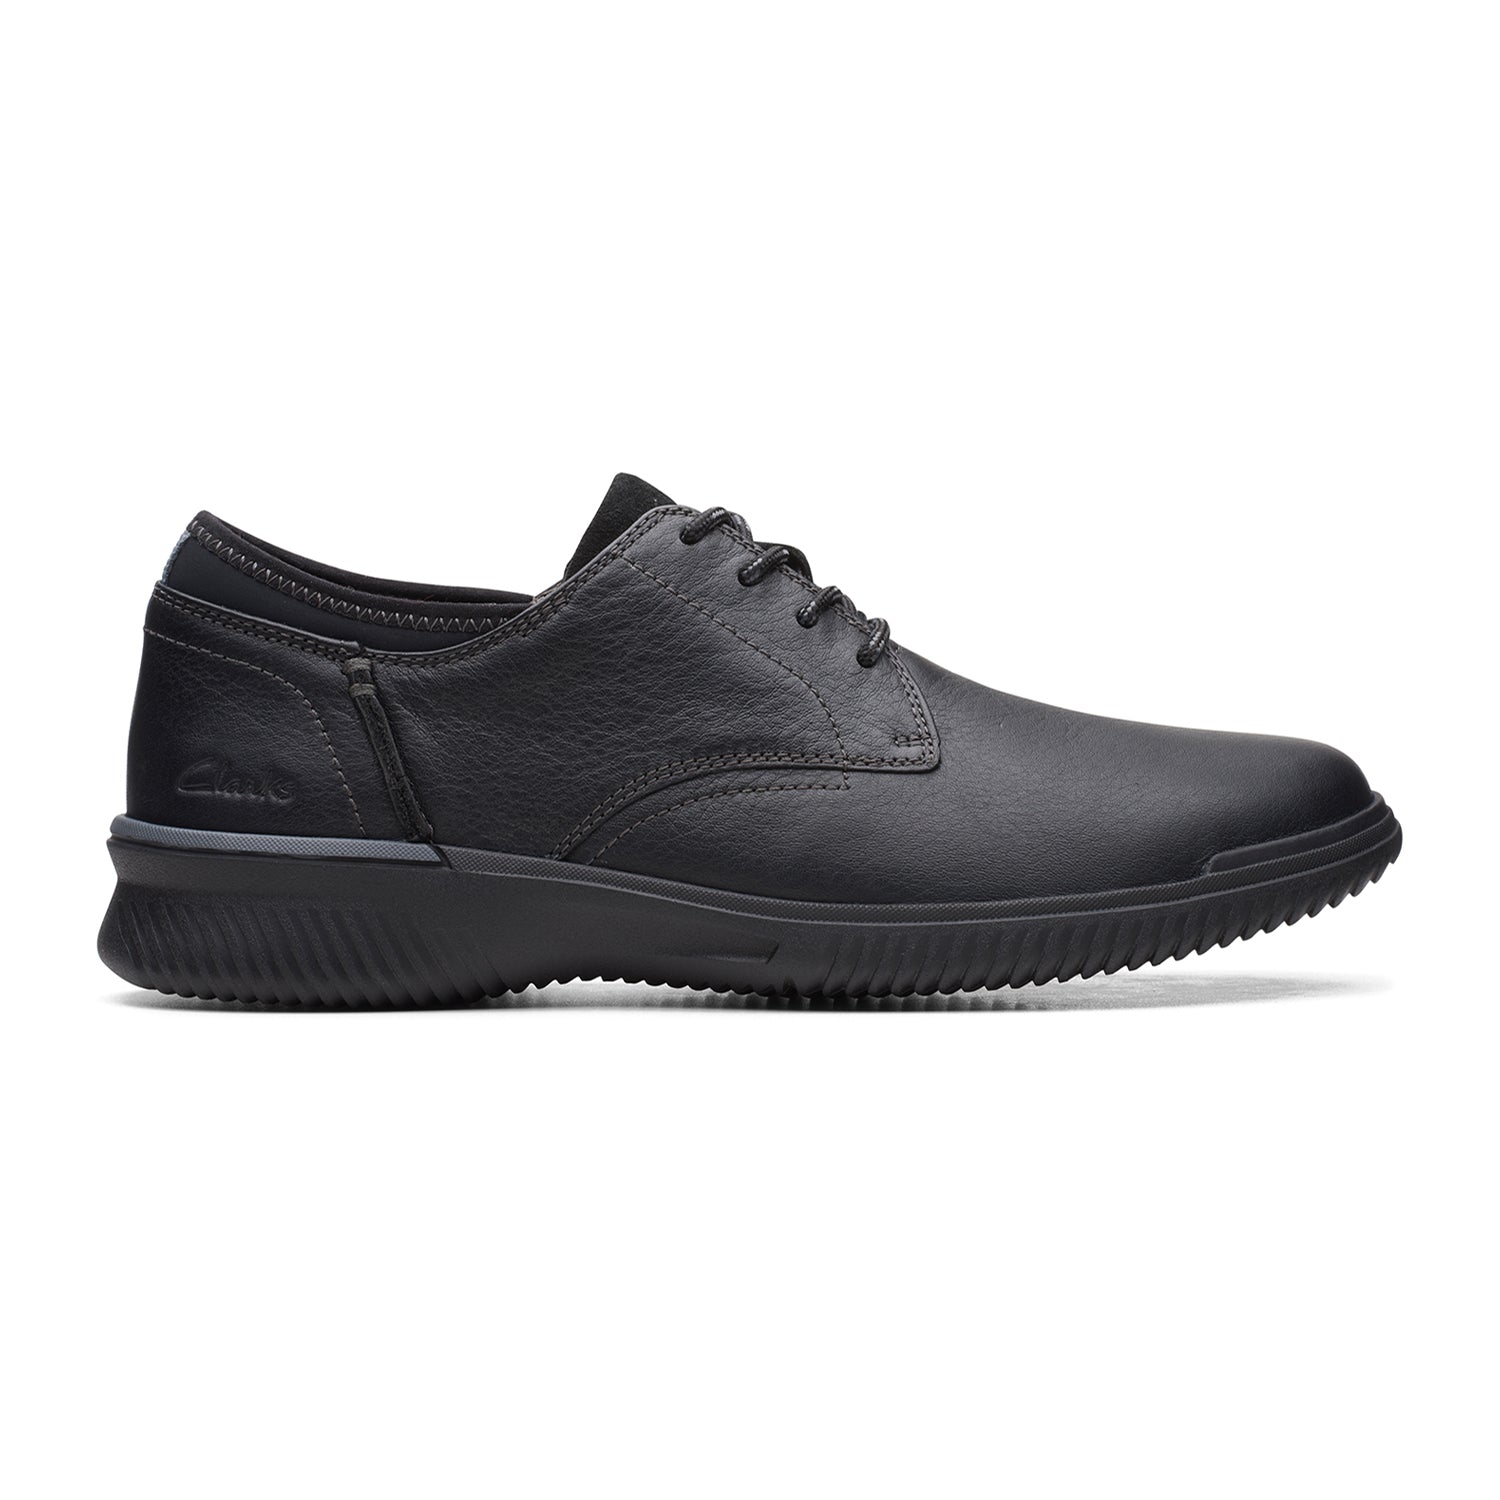 Clarks Donaway Plain Shoes - Black Leather - 261634548 - H Width (Wide Fit)